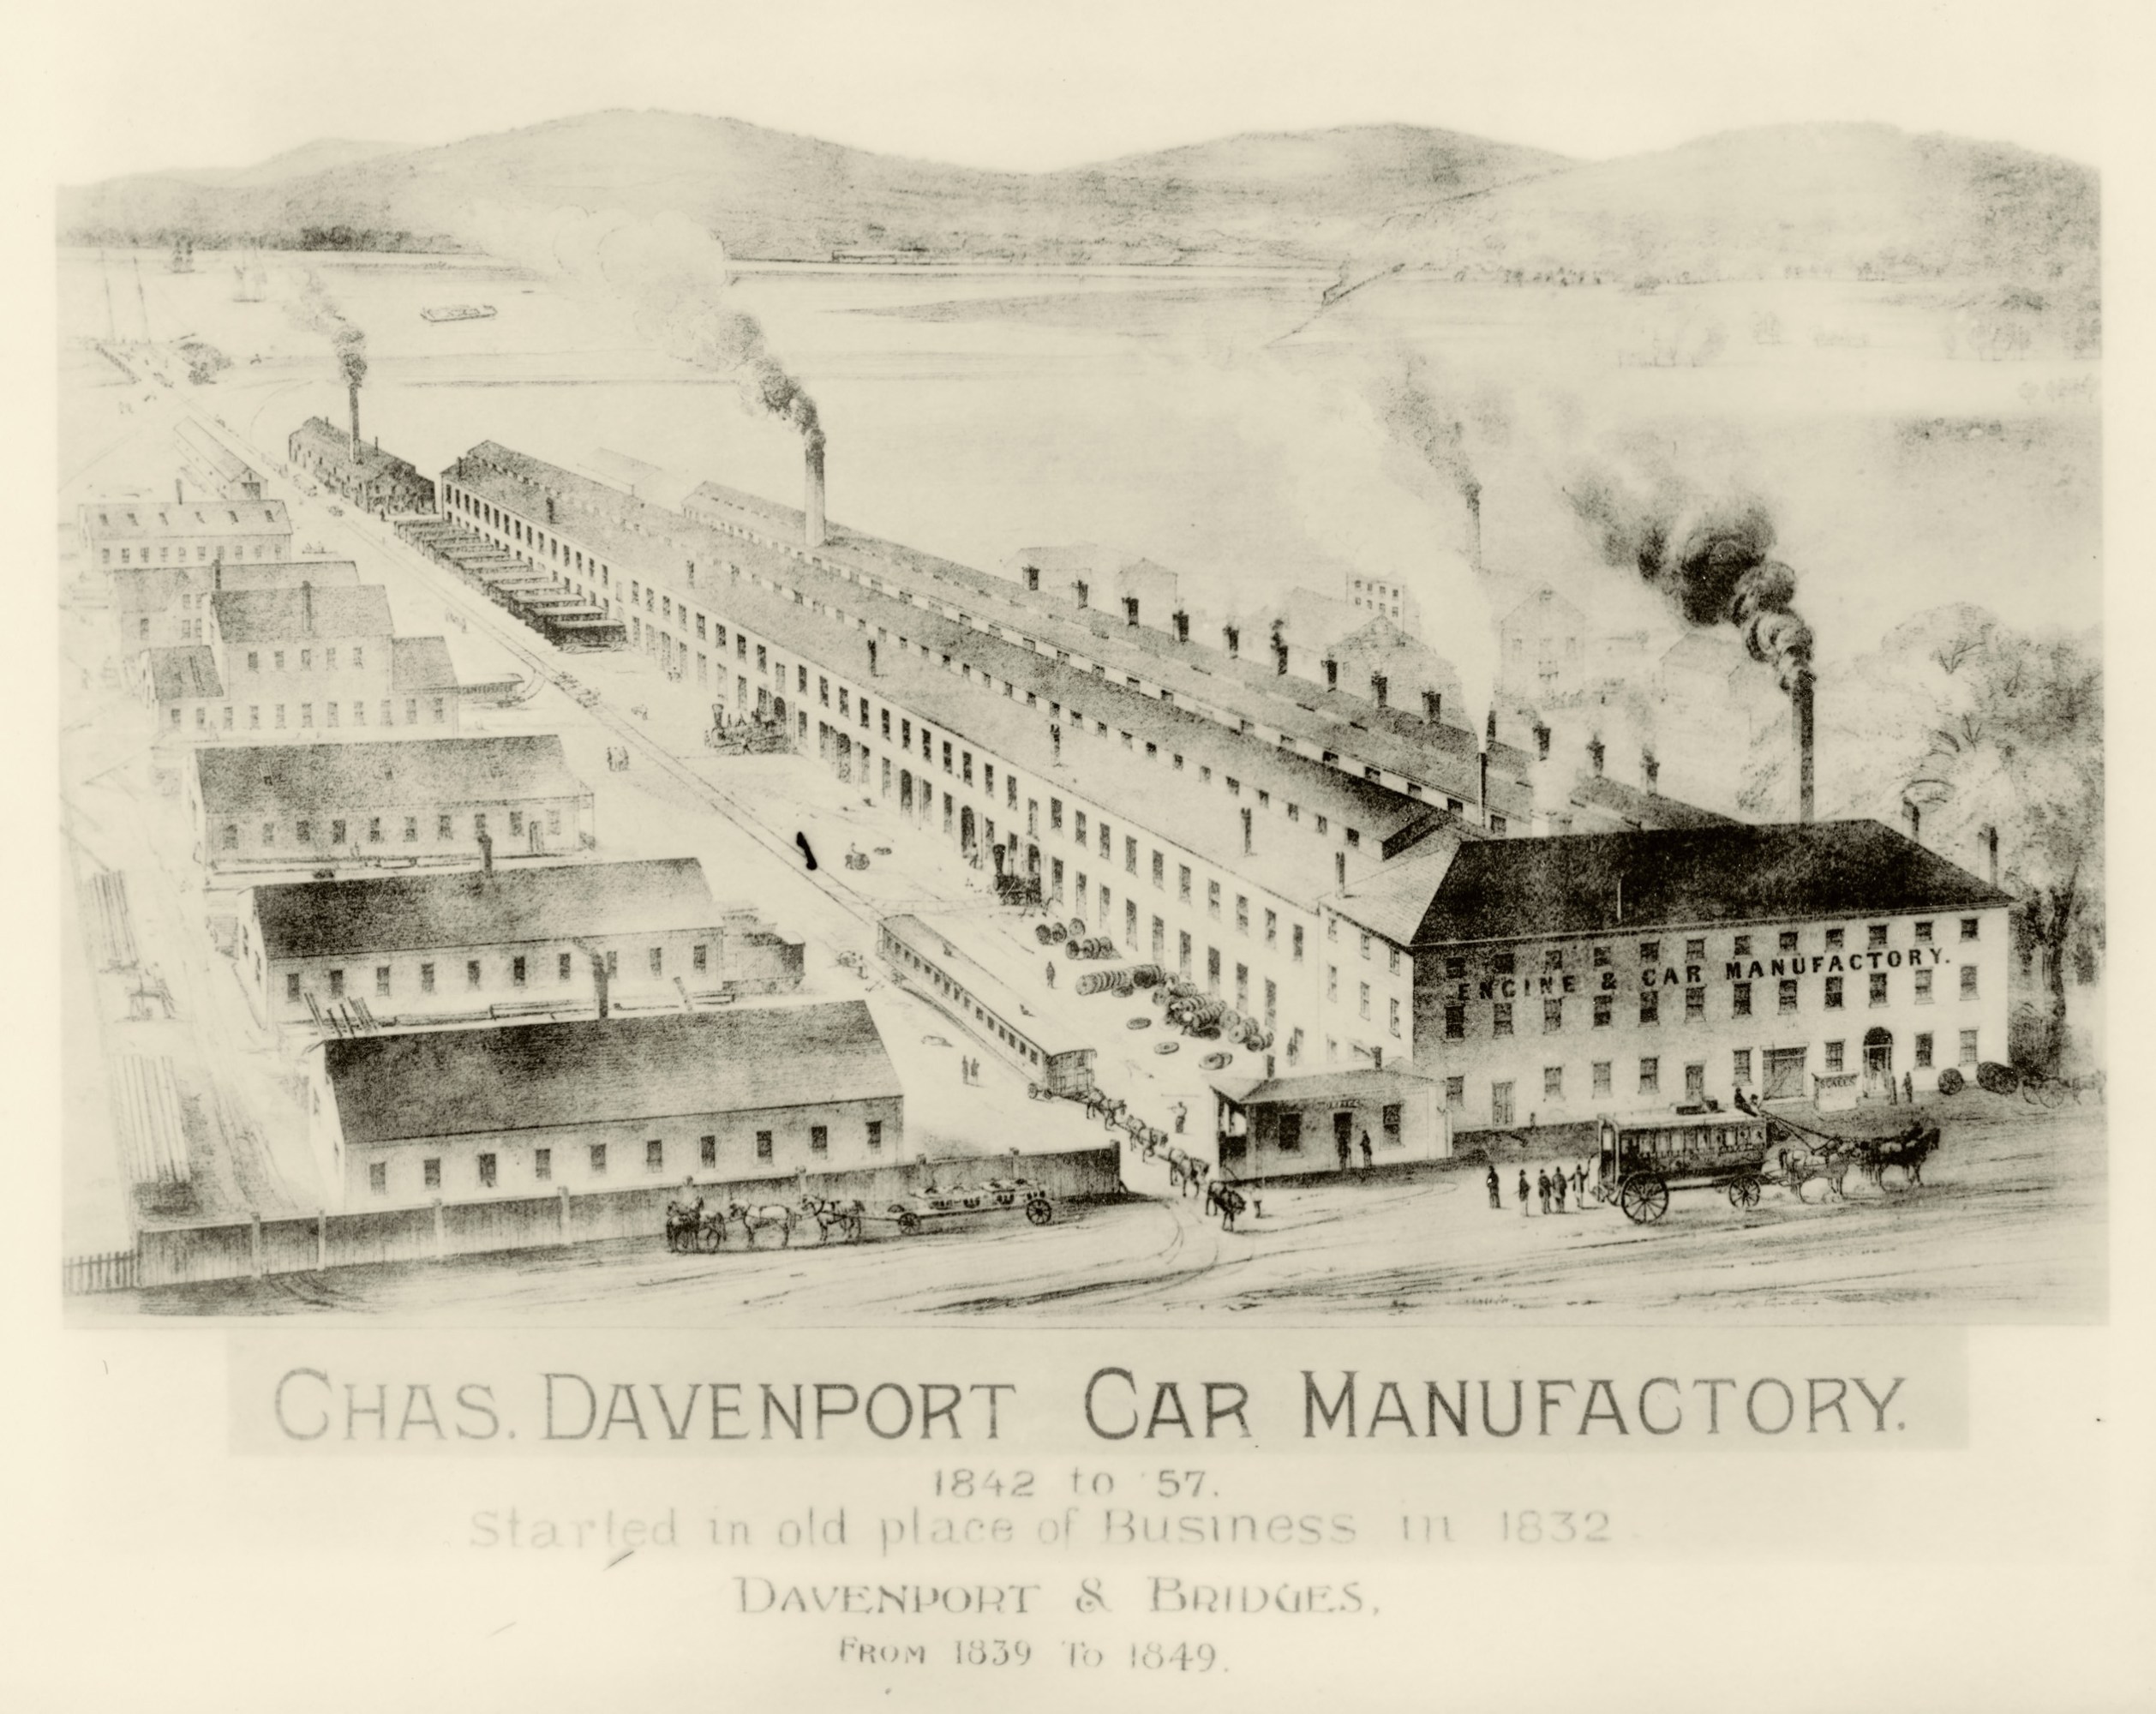 advertisement for Davenport